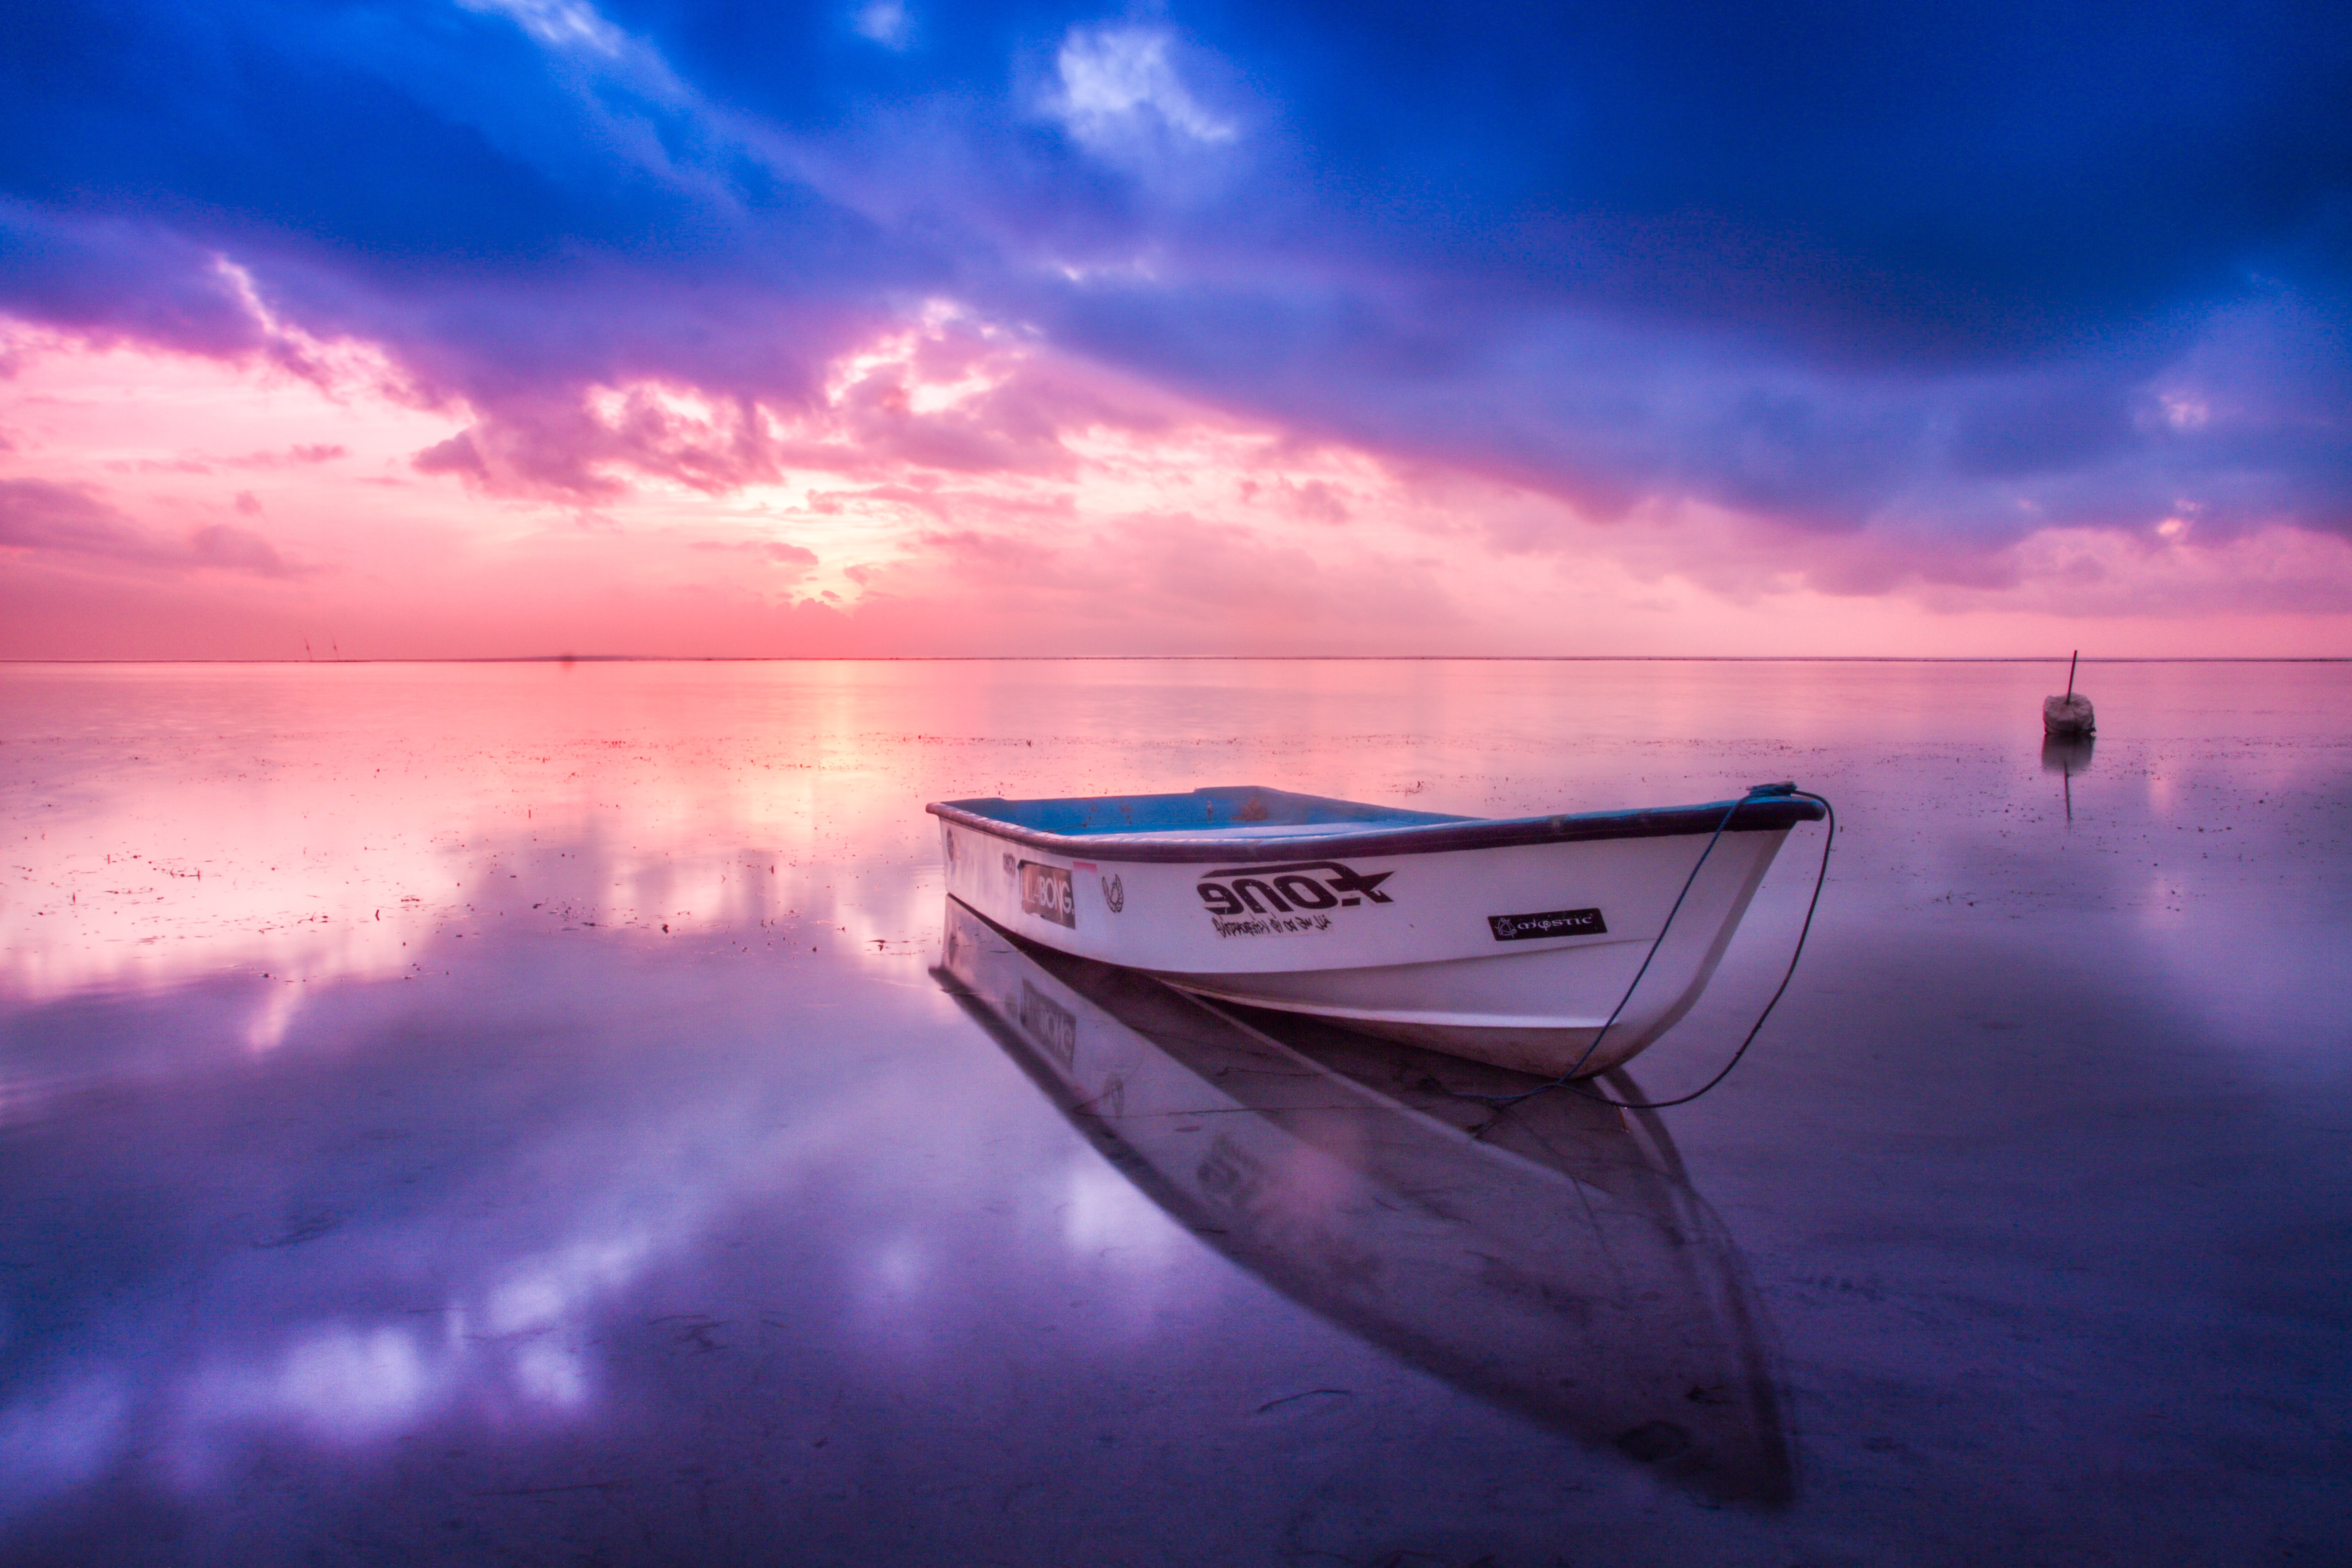 Boat Beach Seashore Reflection Sunset Hd Photography 4k Wallpapers